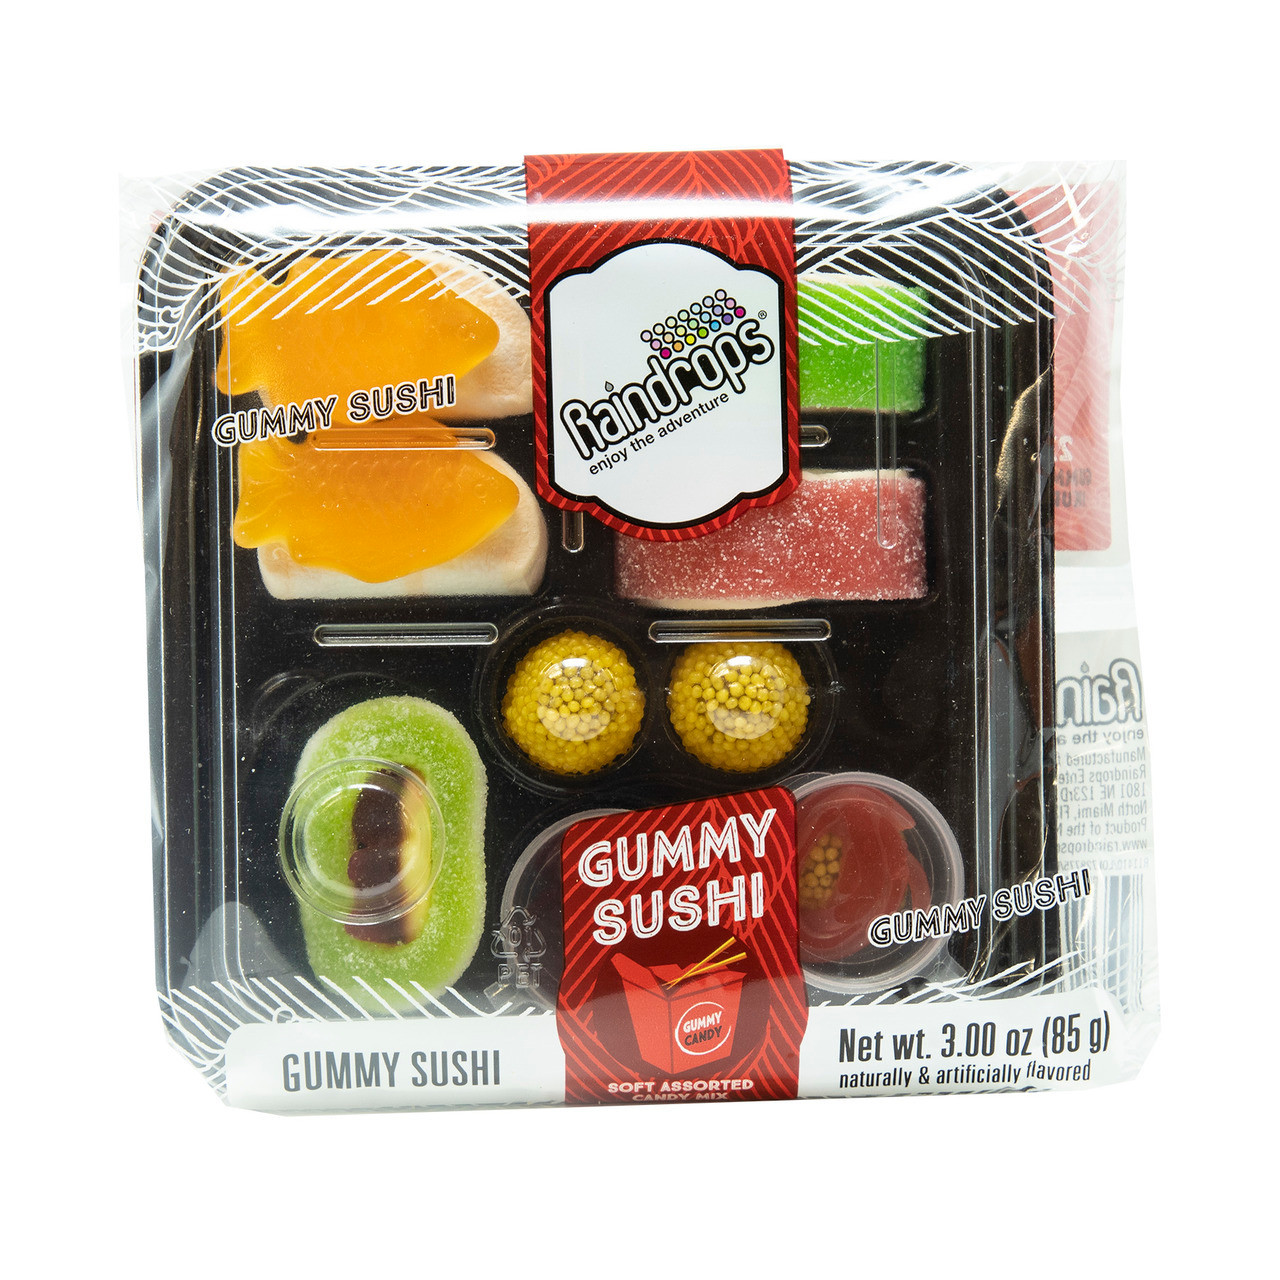 Tiny Candy Sushi Kit, Fun Gummy Candy